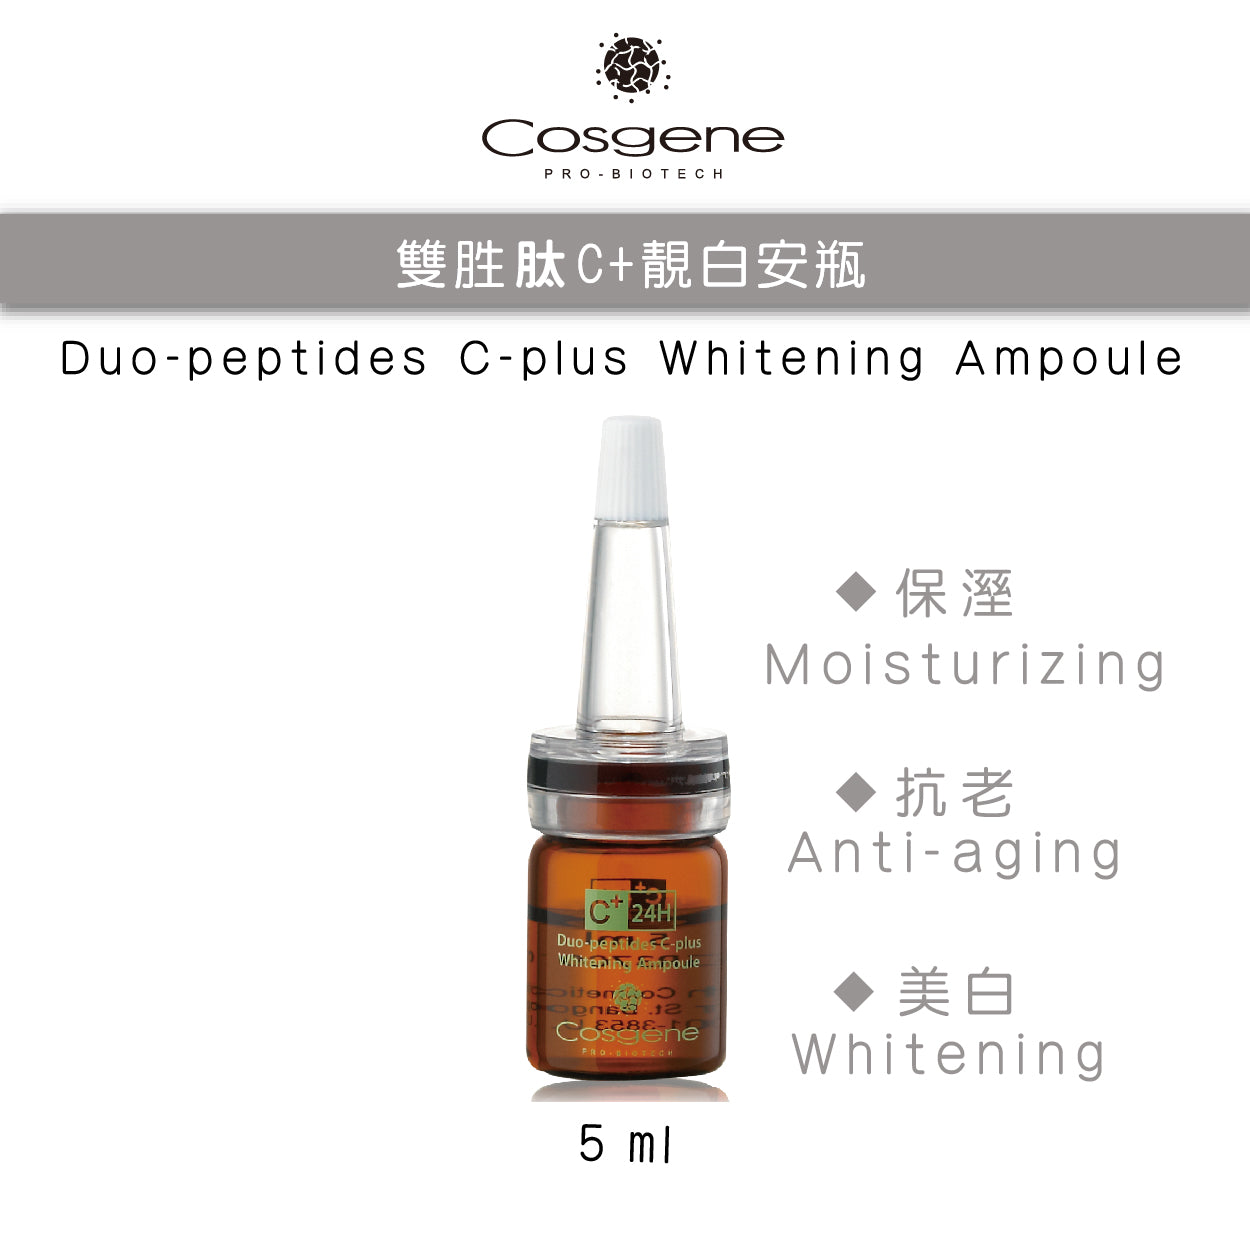 【COSGENE】Duo-peptides C-plus Whitening Ampoule 5ml x6 Duo-peptides C-plus Whitening Ampoule